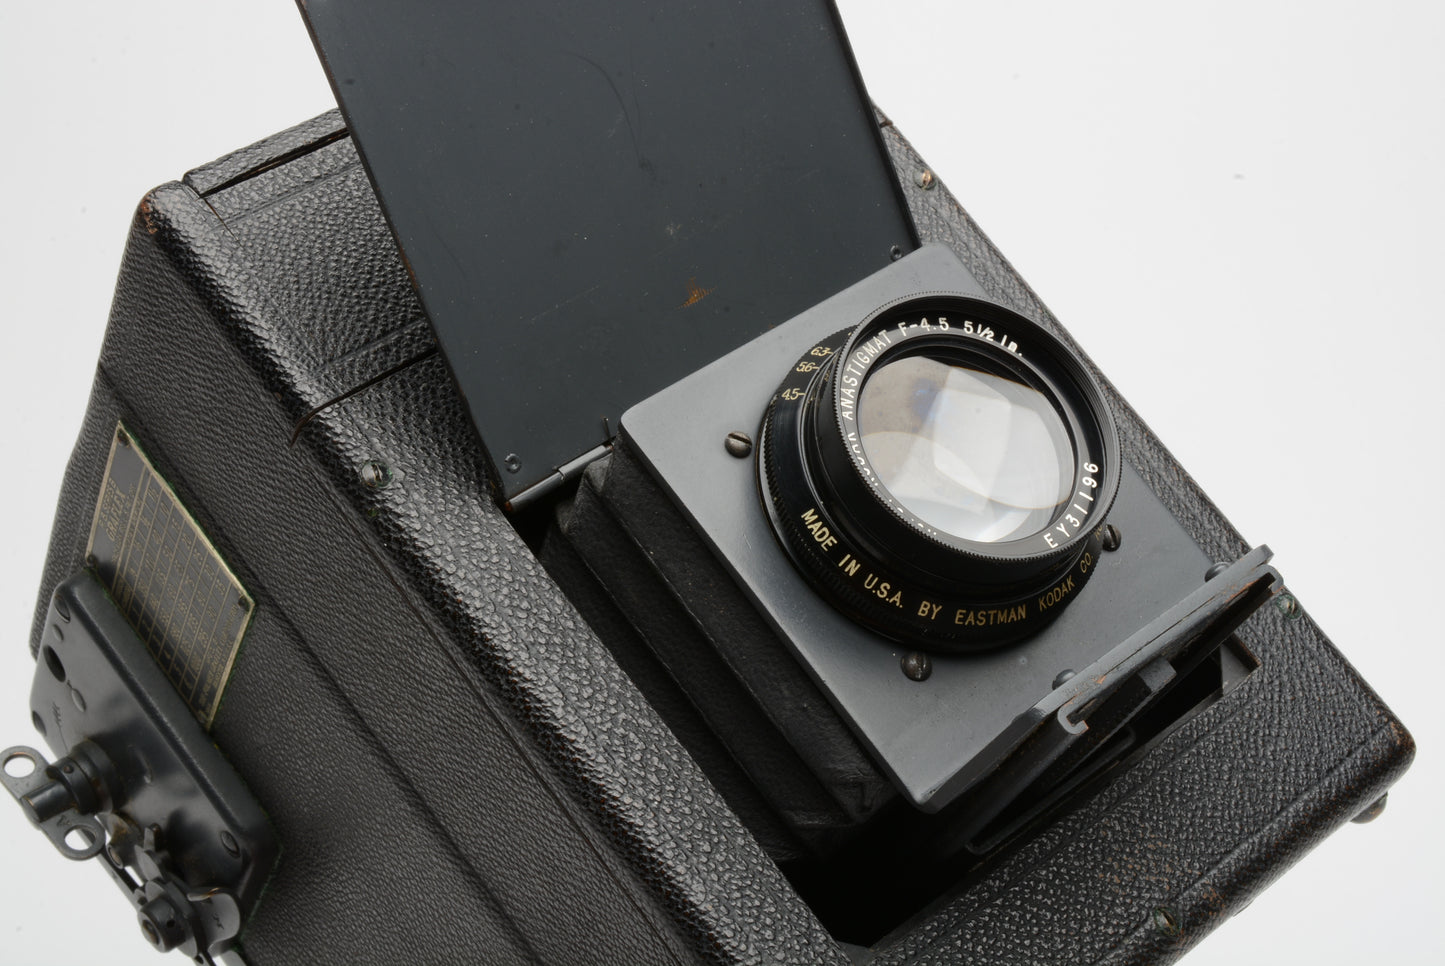 Folmer Graflex R B Series B  Focal-plane shutter camera w/Kodak #31 5.5" f4.5 lens Vintage